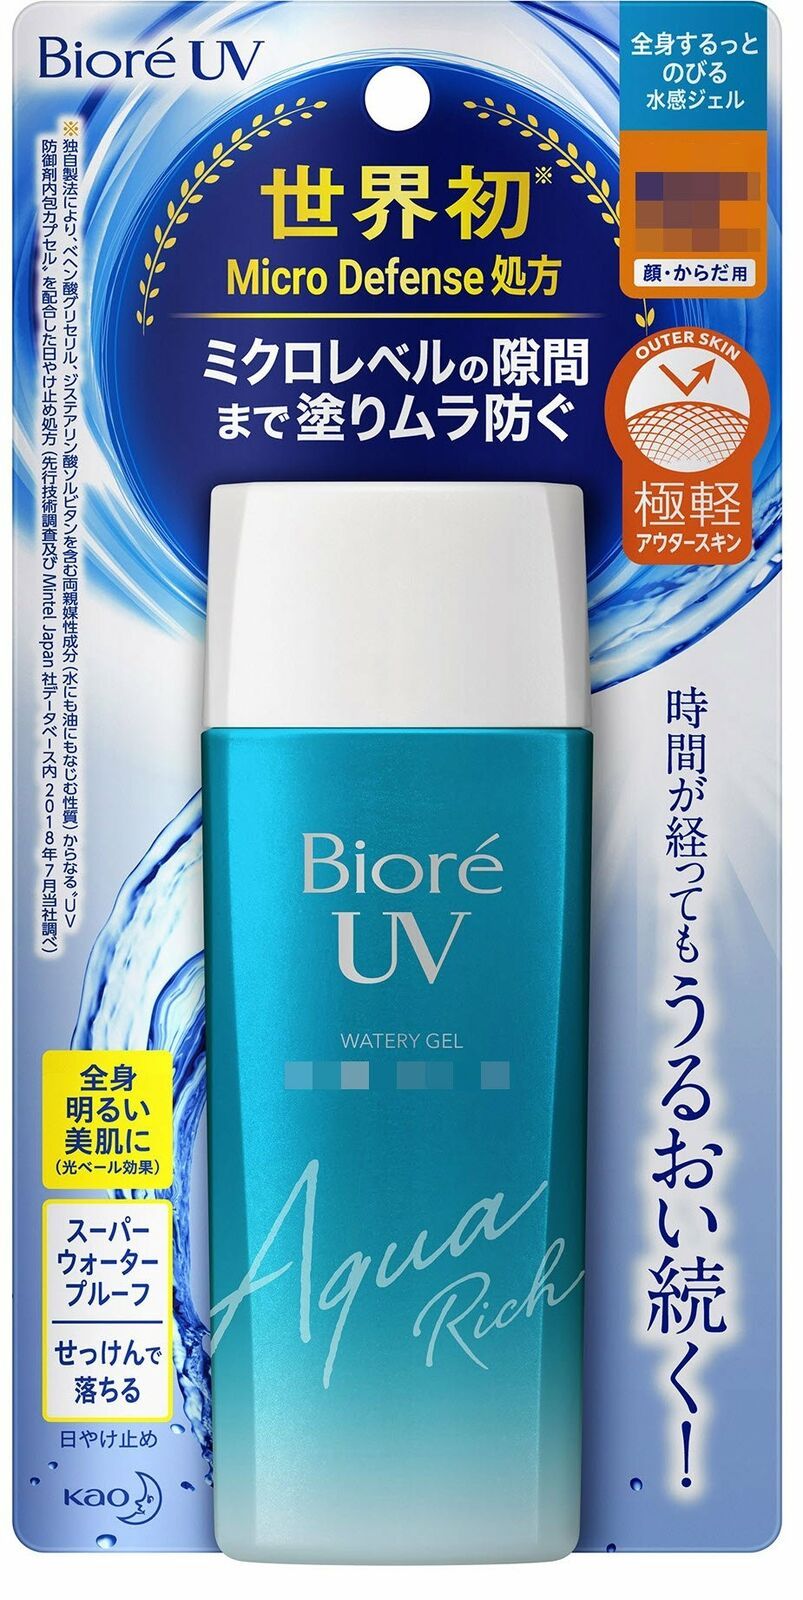 Kao Biore UV Aqua Rich Watery Gel SPF50+ 2019 New 90ml - $15.83